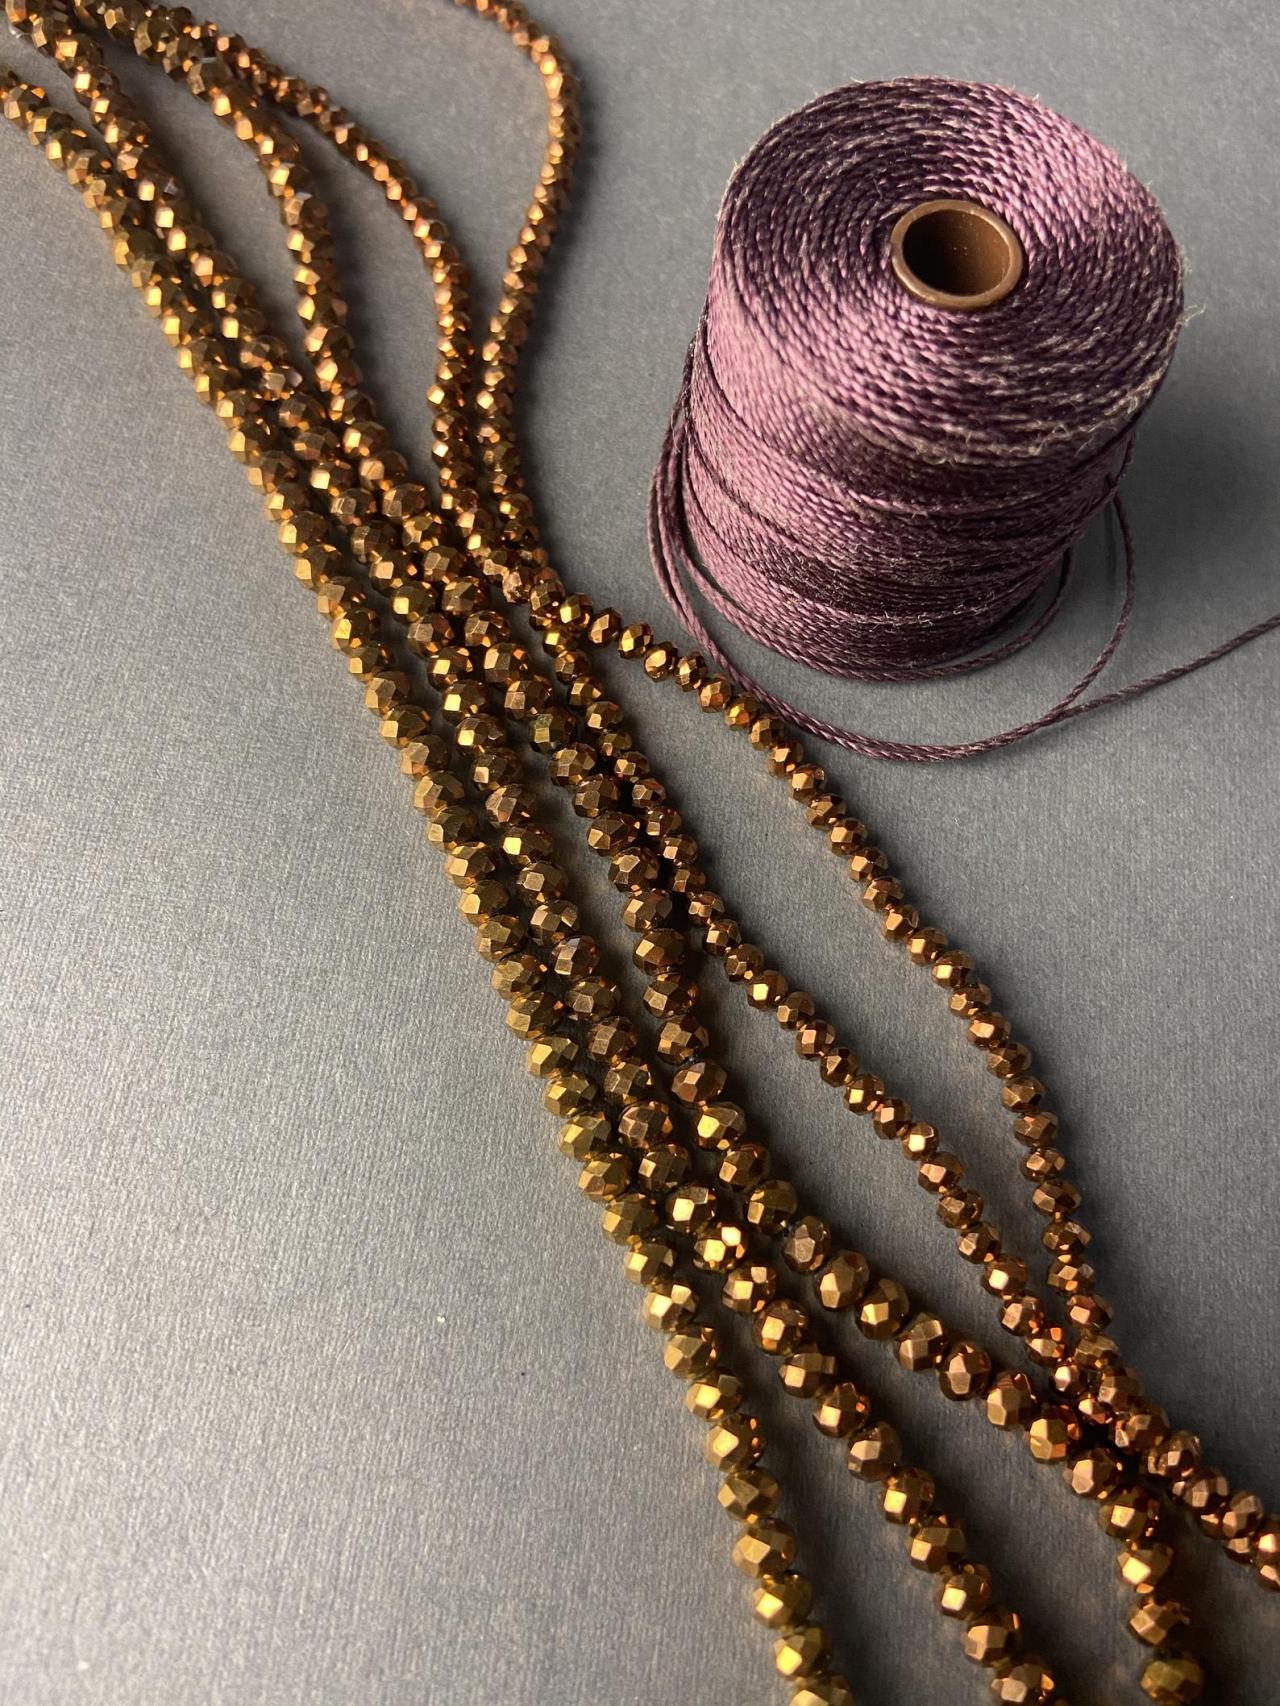 Lot of 5 Strands Metallic Bronze Burgundy Graduated Crystal Strand Bead Crochet Kit #41